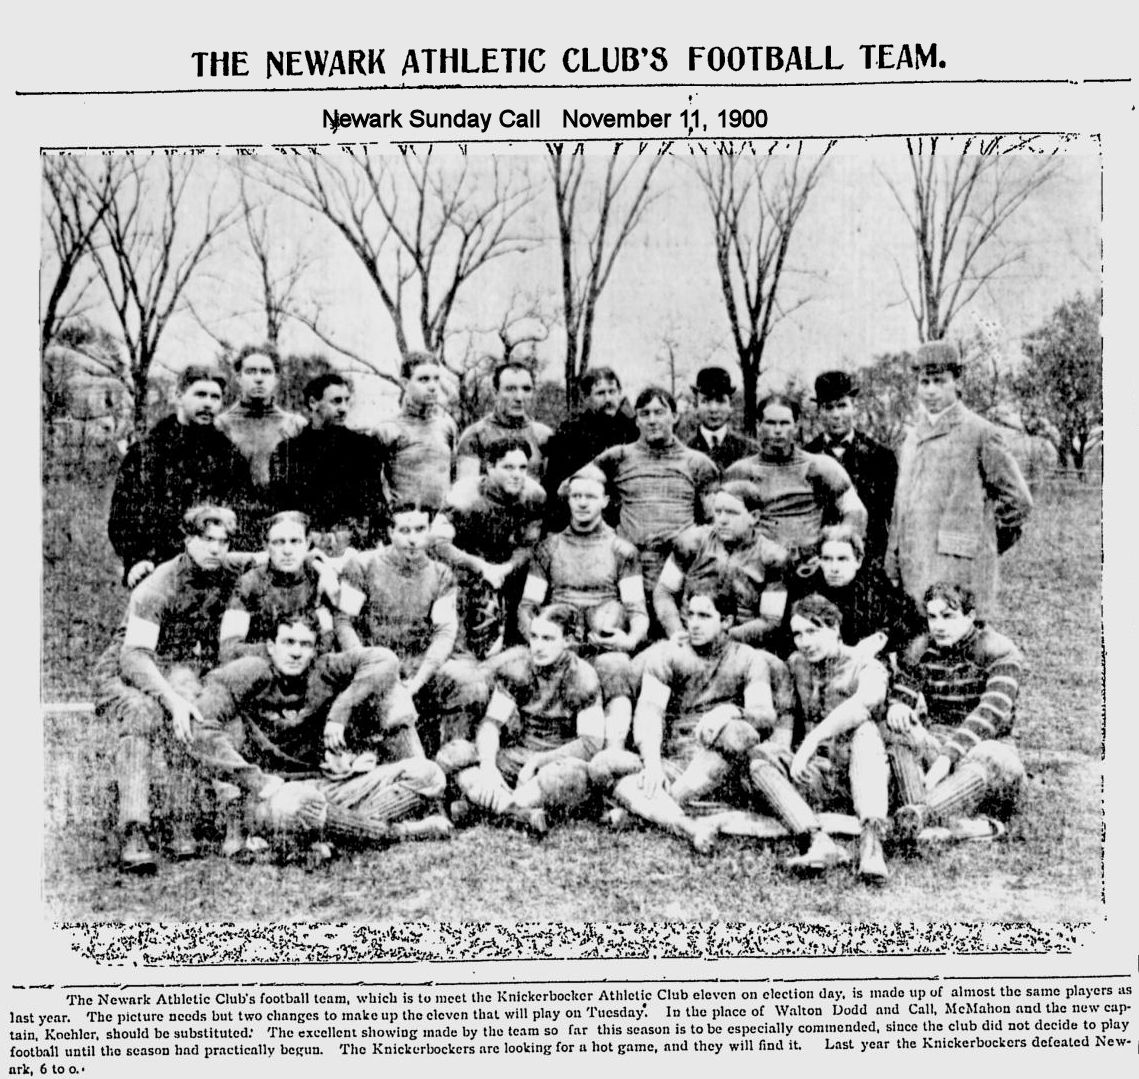 The Newark Athletic Club's Football Team
November 11, 1900
